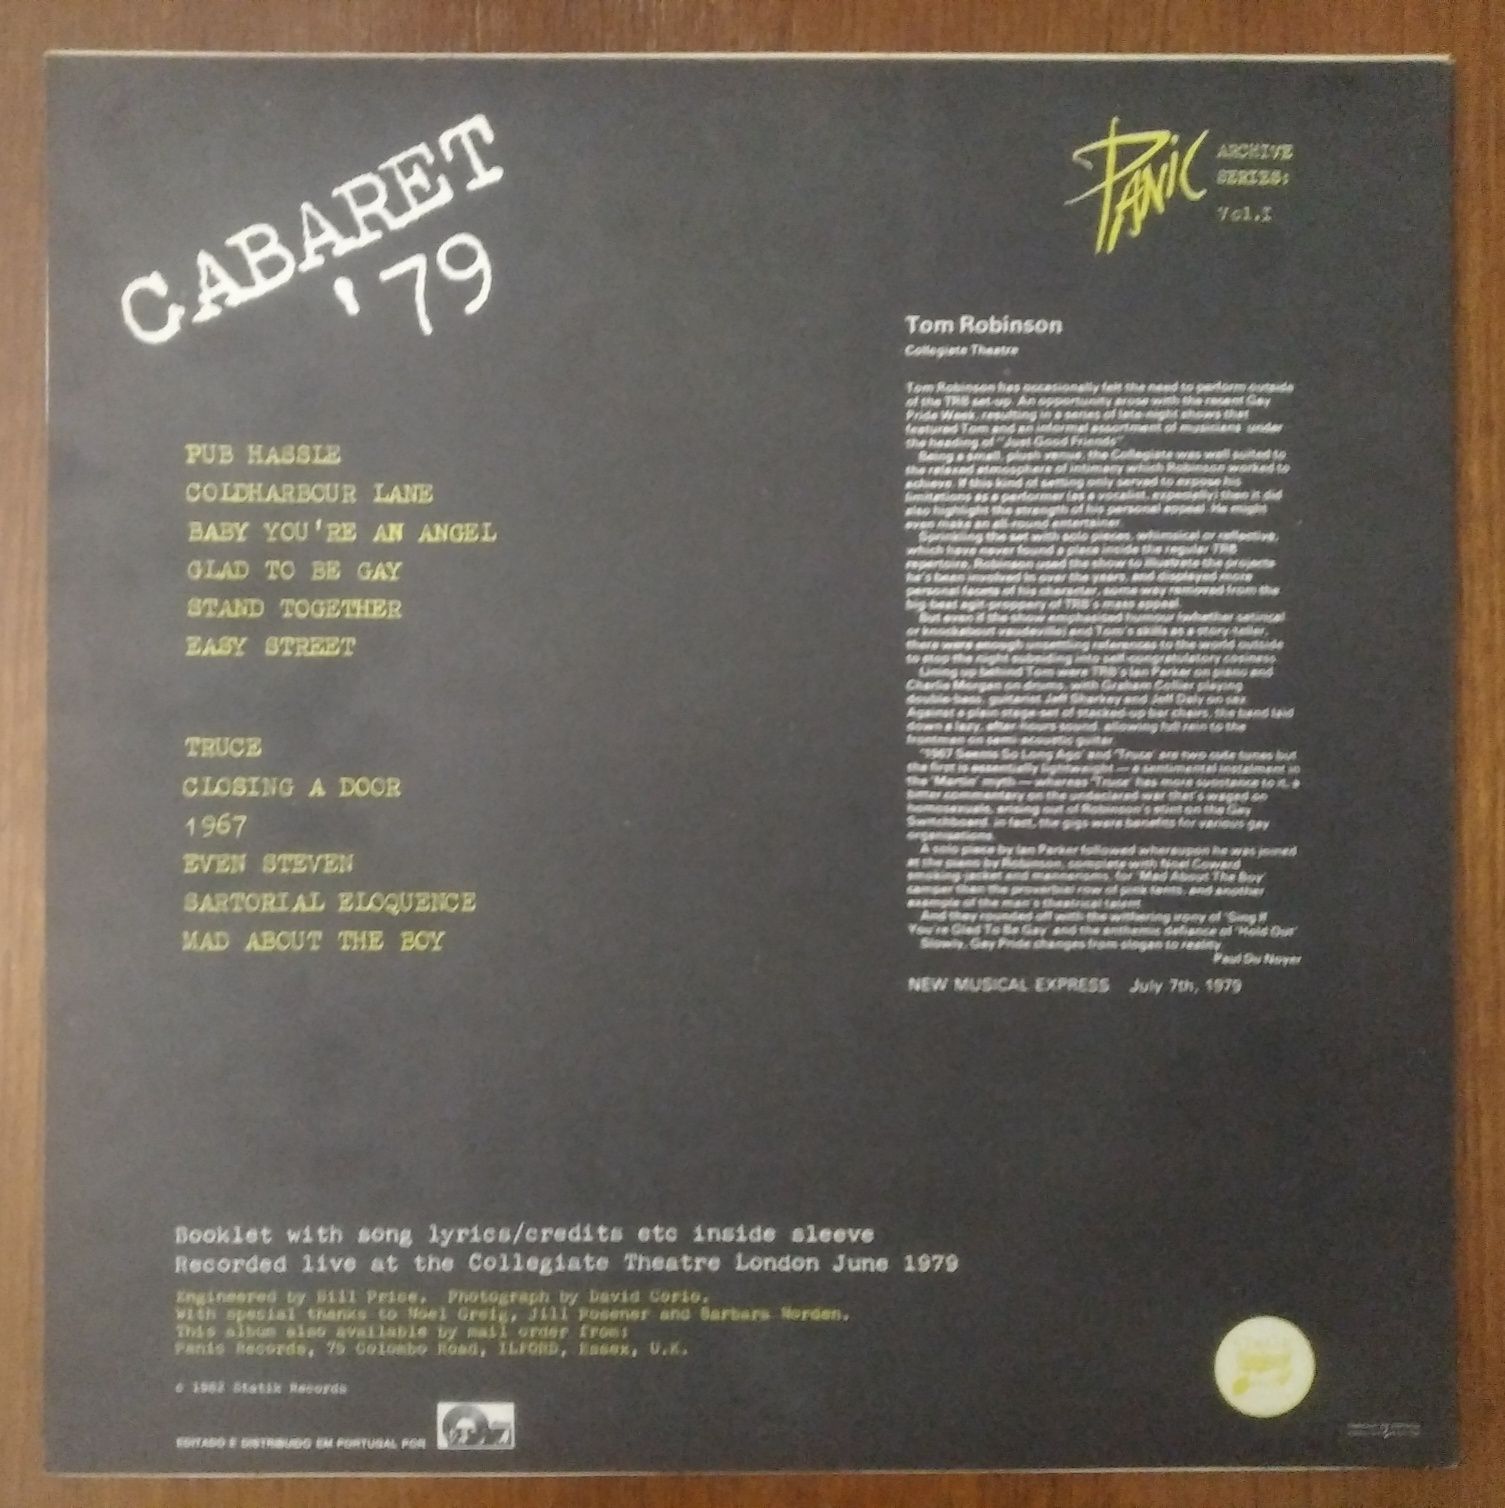 Tom Robinson disco e vinil "Cabaret'79".